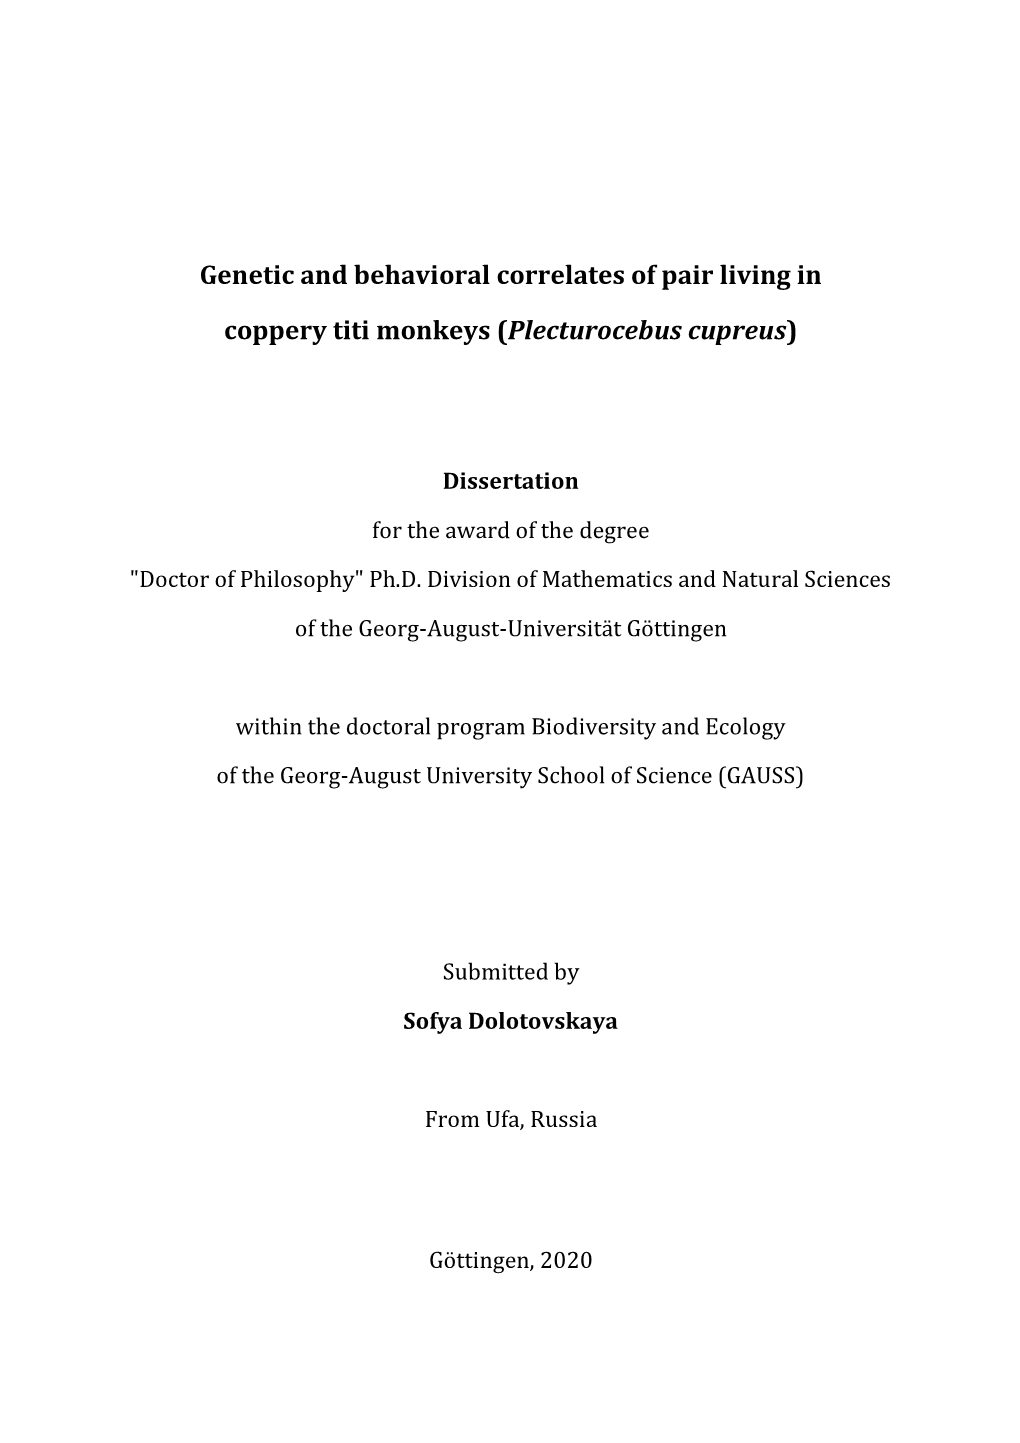 Genetic and Behavioral Correlates of Pair Living in Coppery Titi Monkeys, Plecturocebus Cupreus